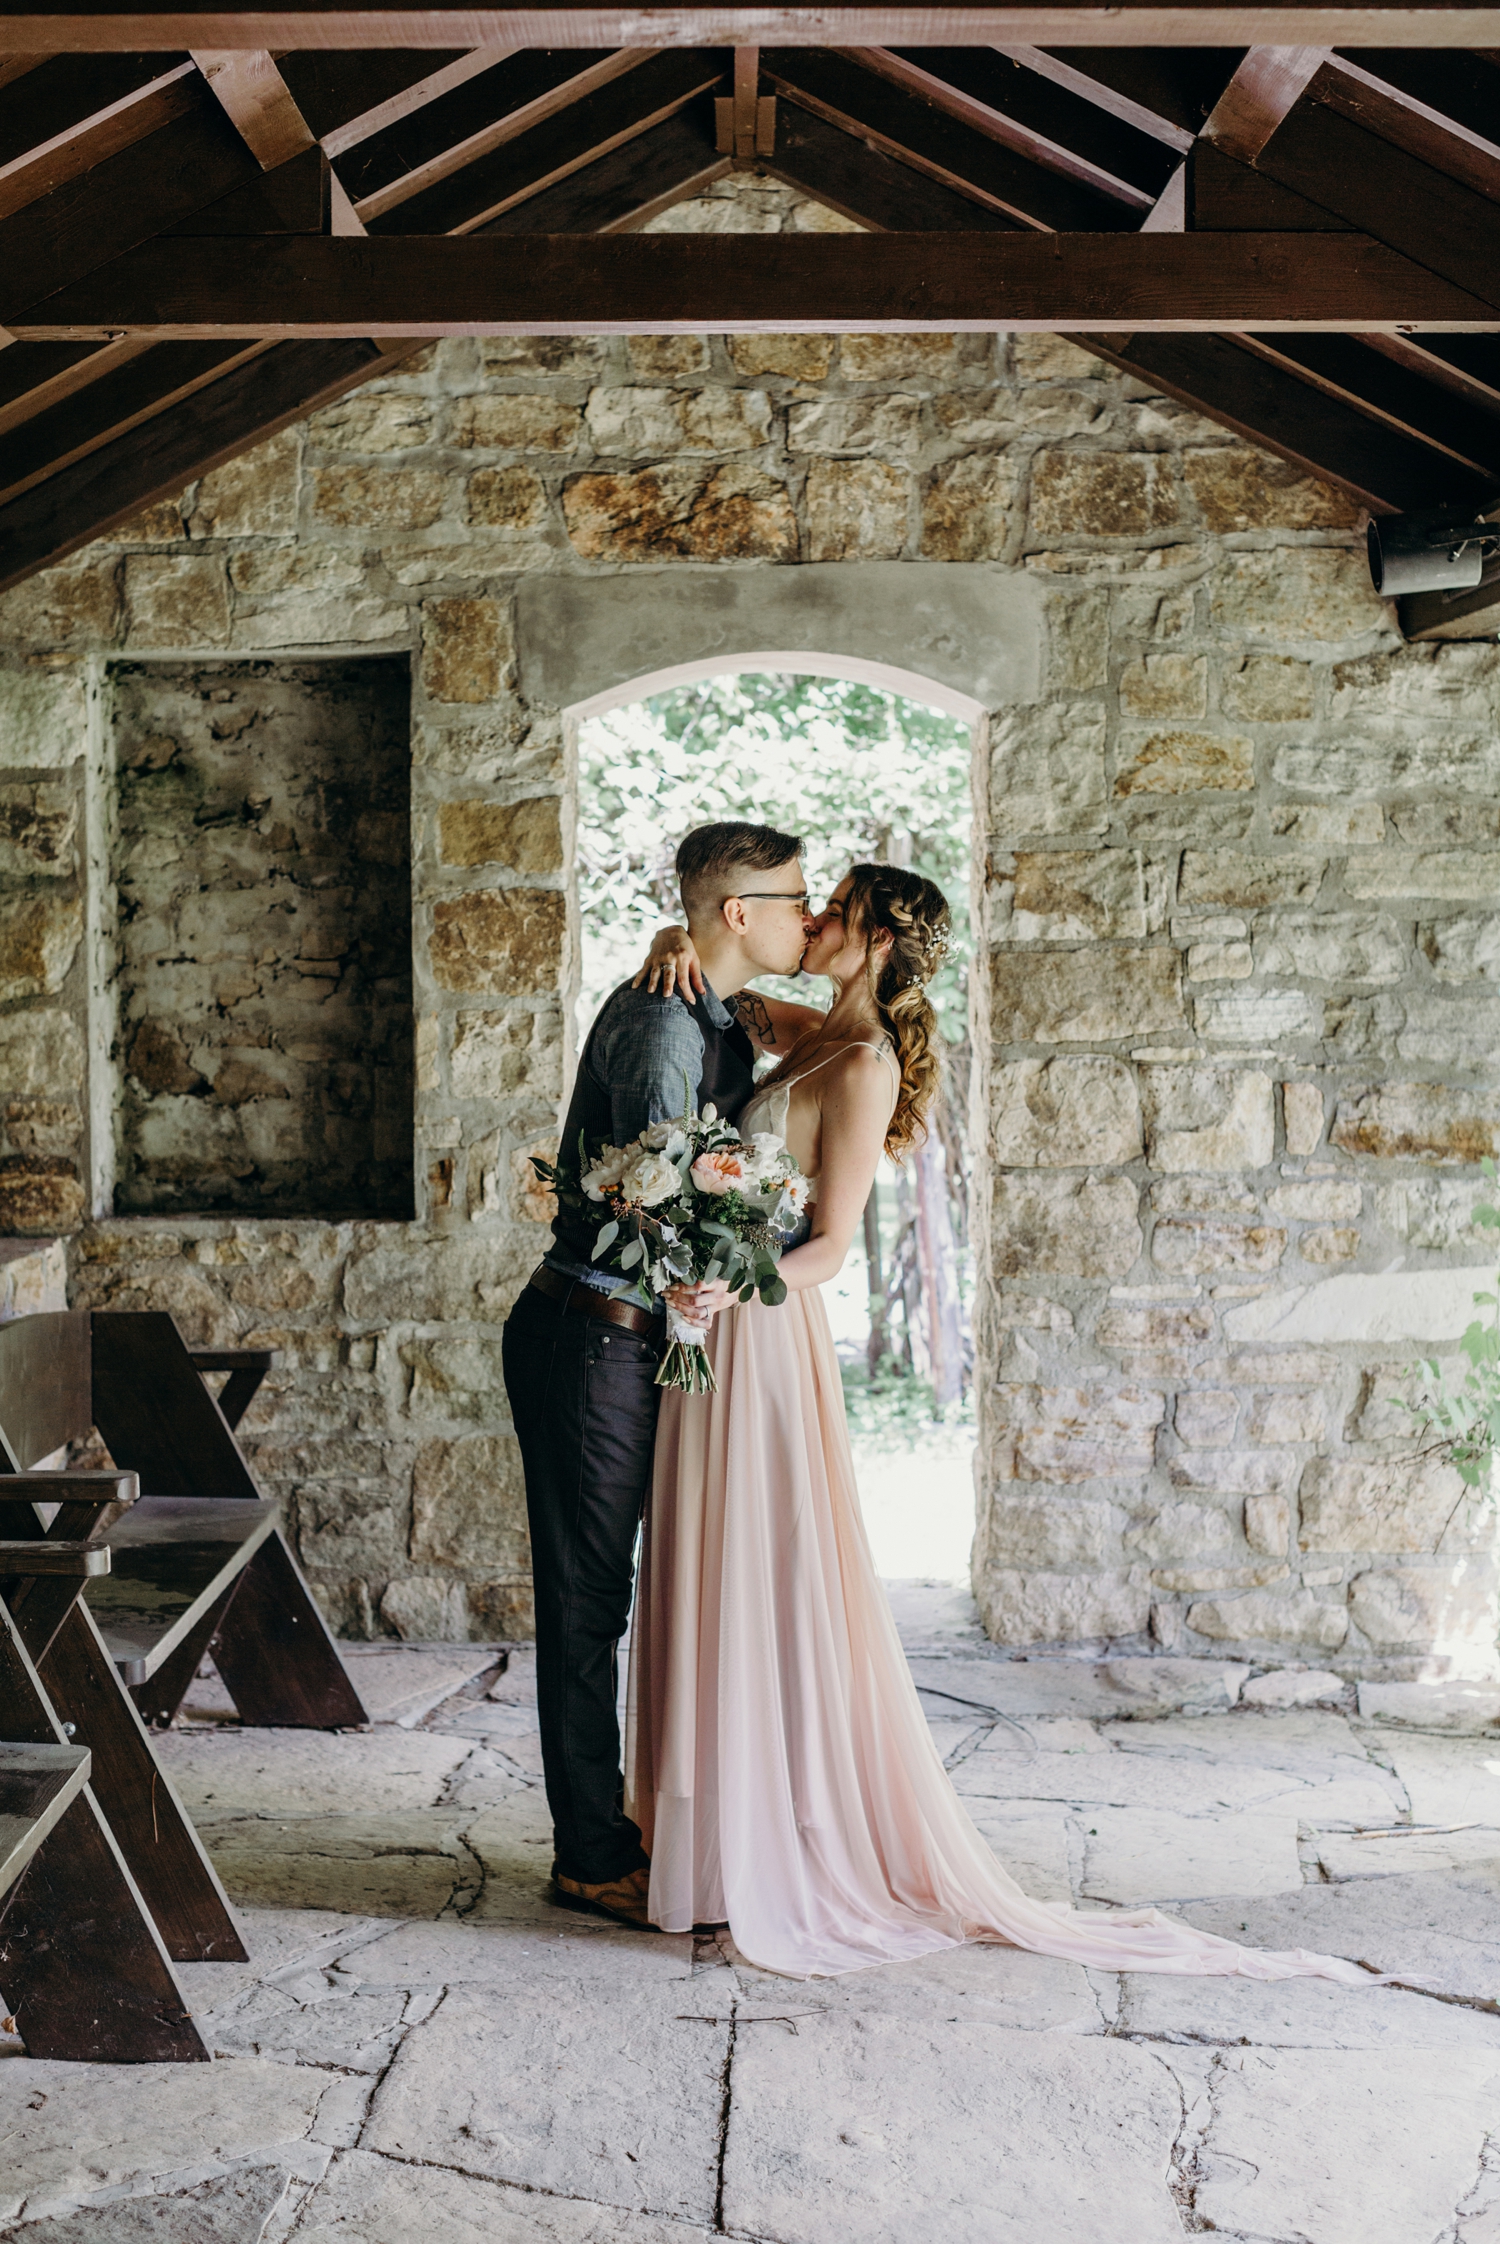 Ottawa Intimate Wedding Photographer - Kasandra Arthur 5.jpg